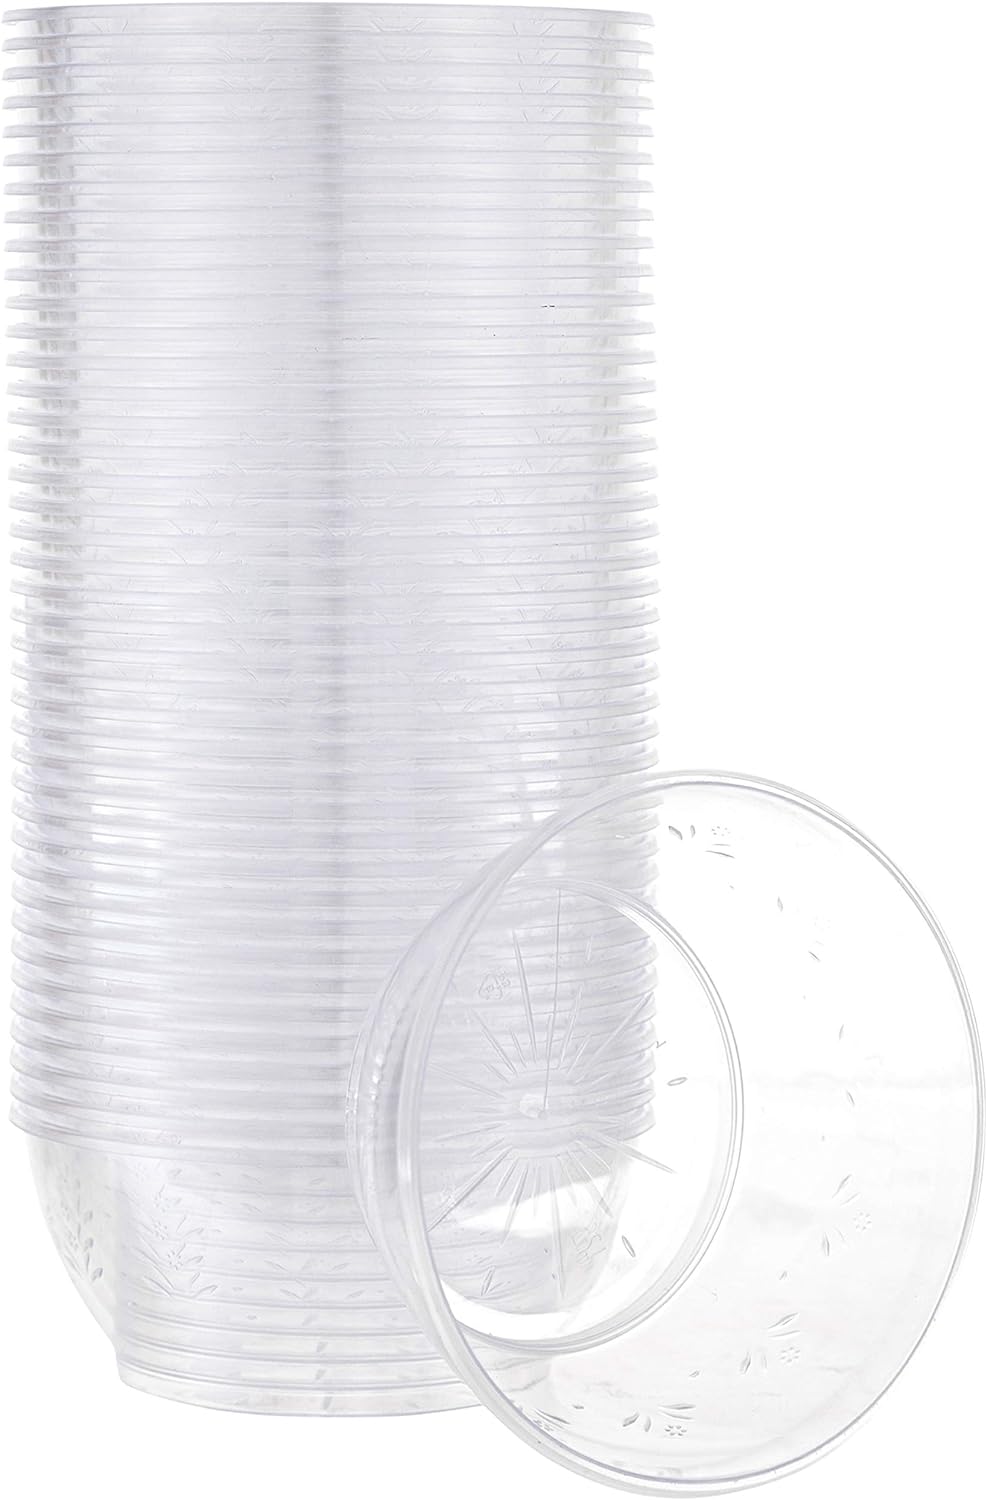 PLASTICPRO 6 oz Hard plastic Desert Bowls - Ice cream Bowls premium Quality Disposable Clear Bowl Pack of 50